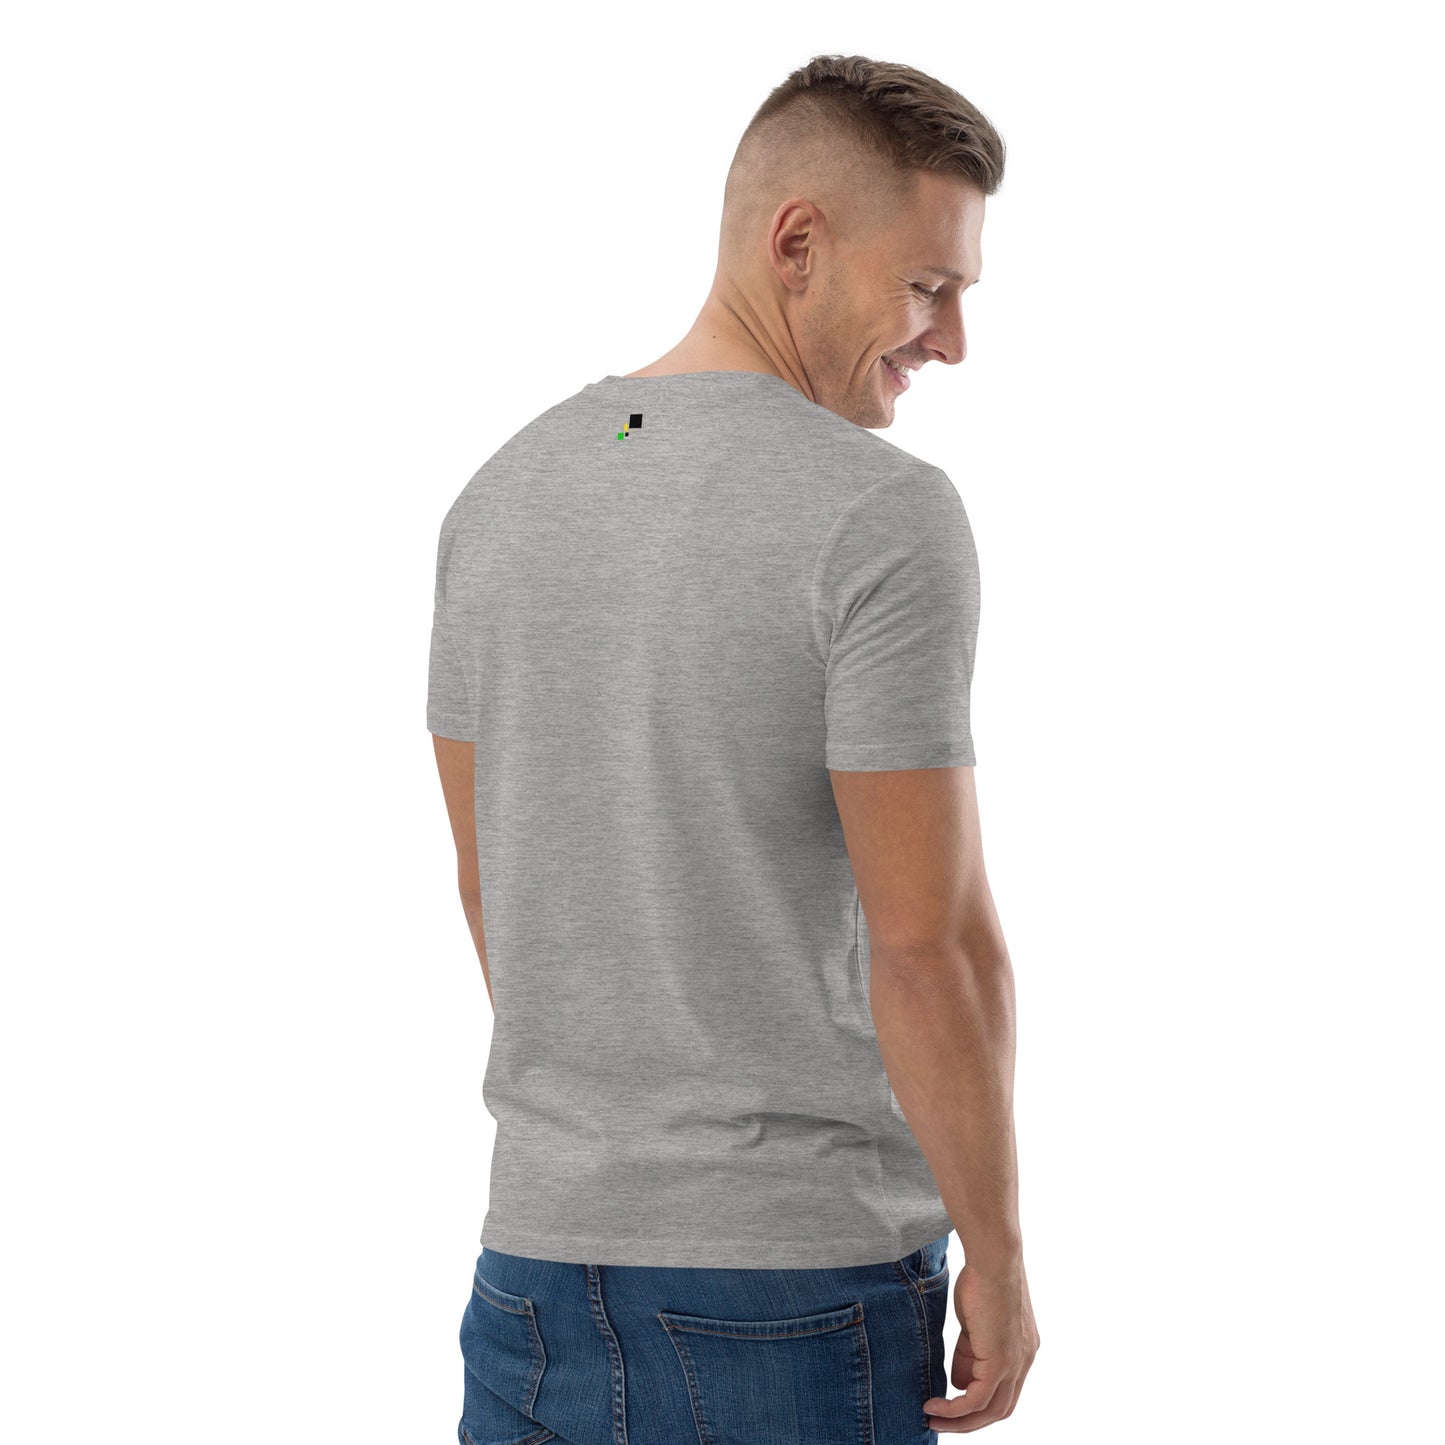 Sell It All low profile - Camiseta de algodón orgánico unisex